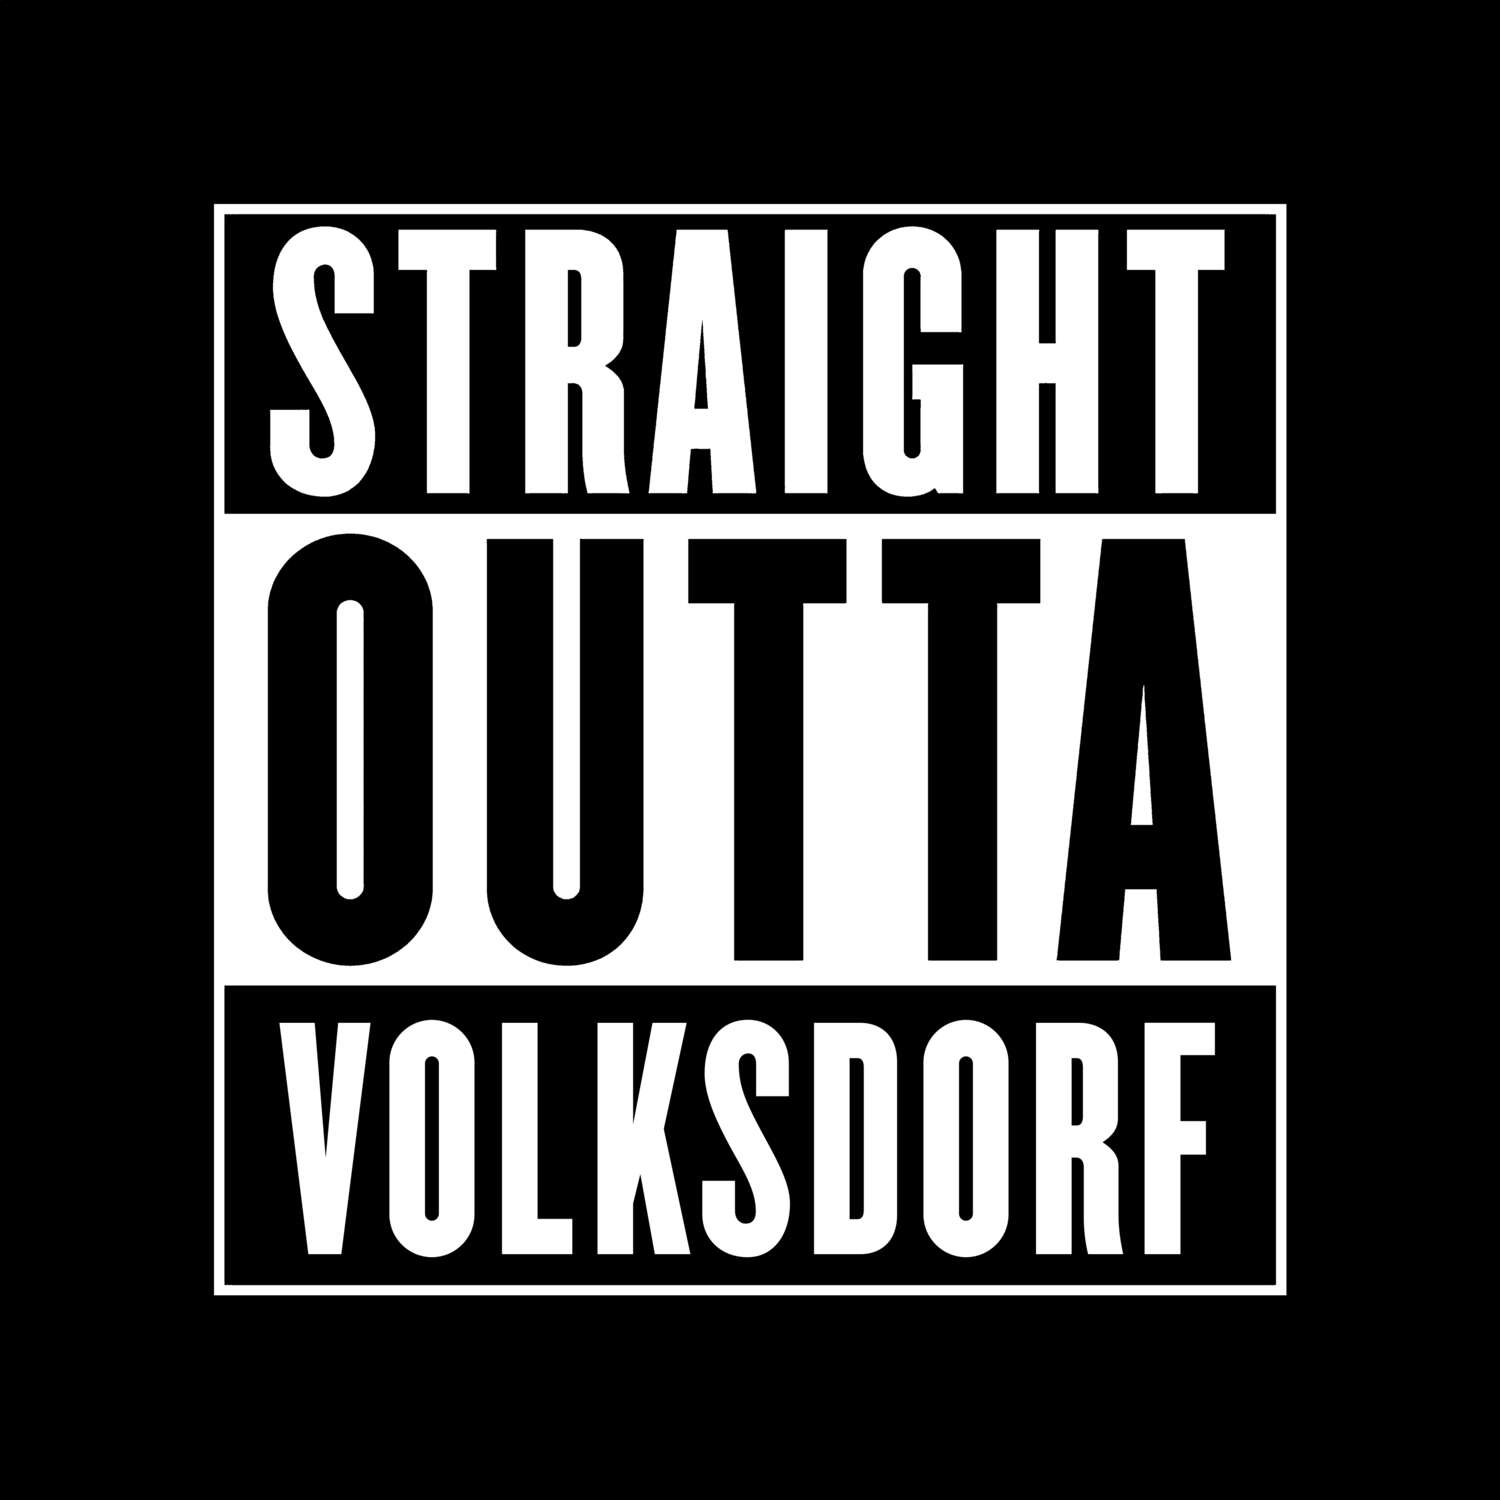 Volksdorf T-Shirt »Straight Outta«